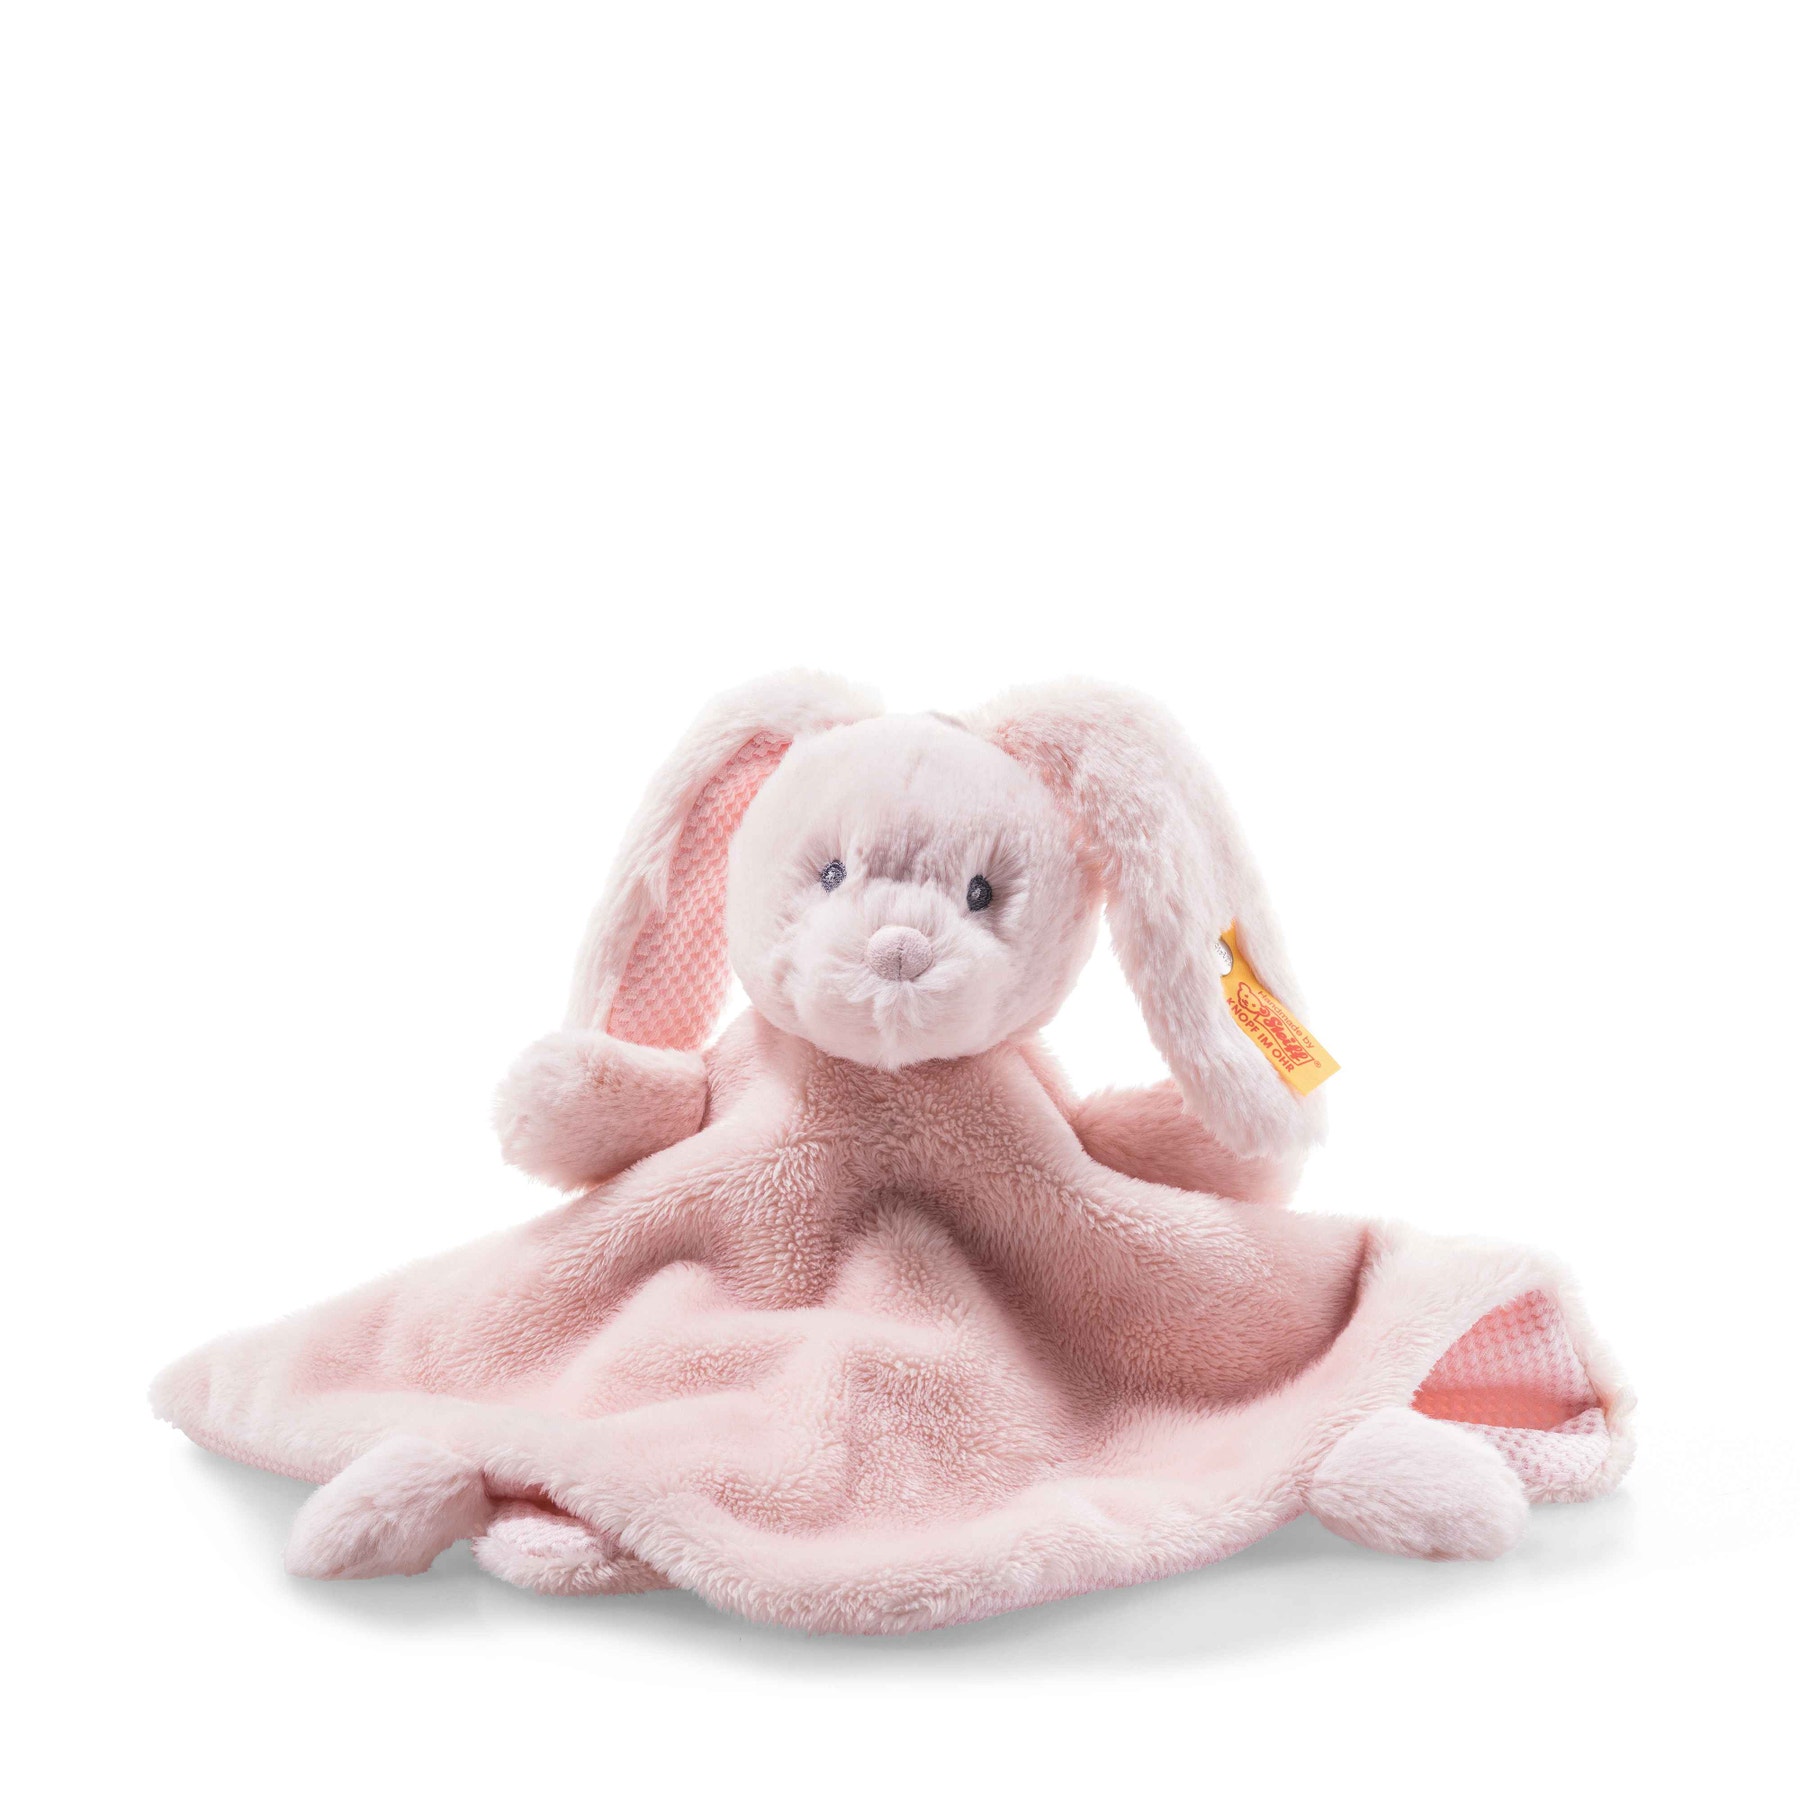 Soft Cuddly Friends Belly rabbit comforter